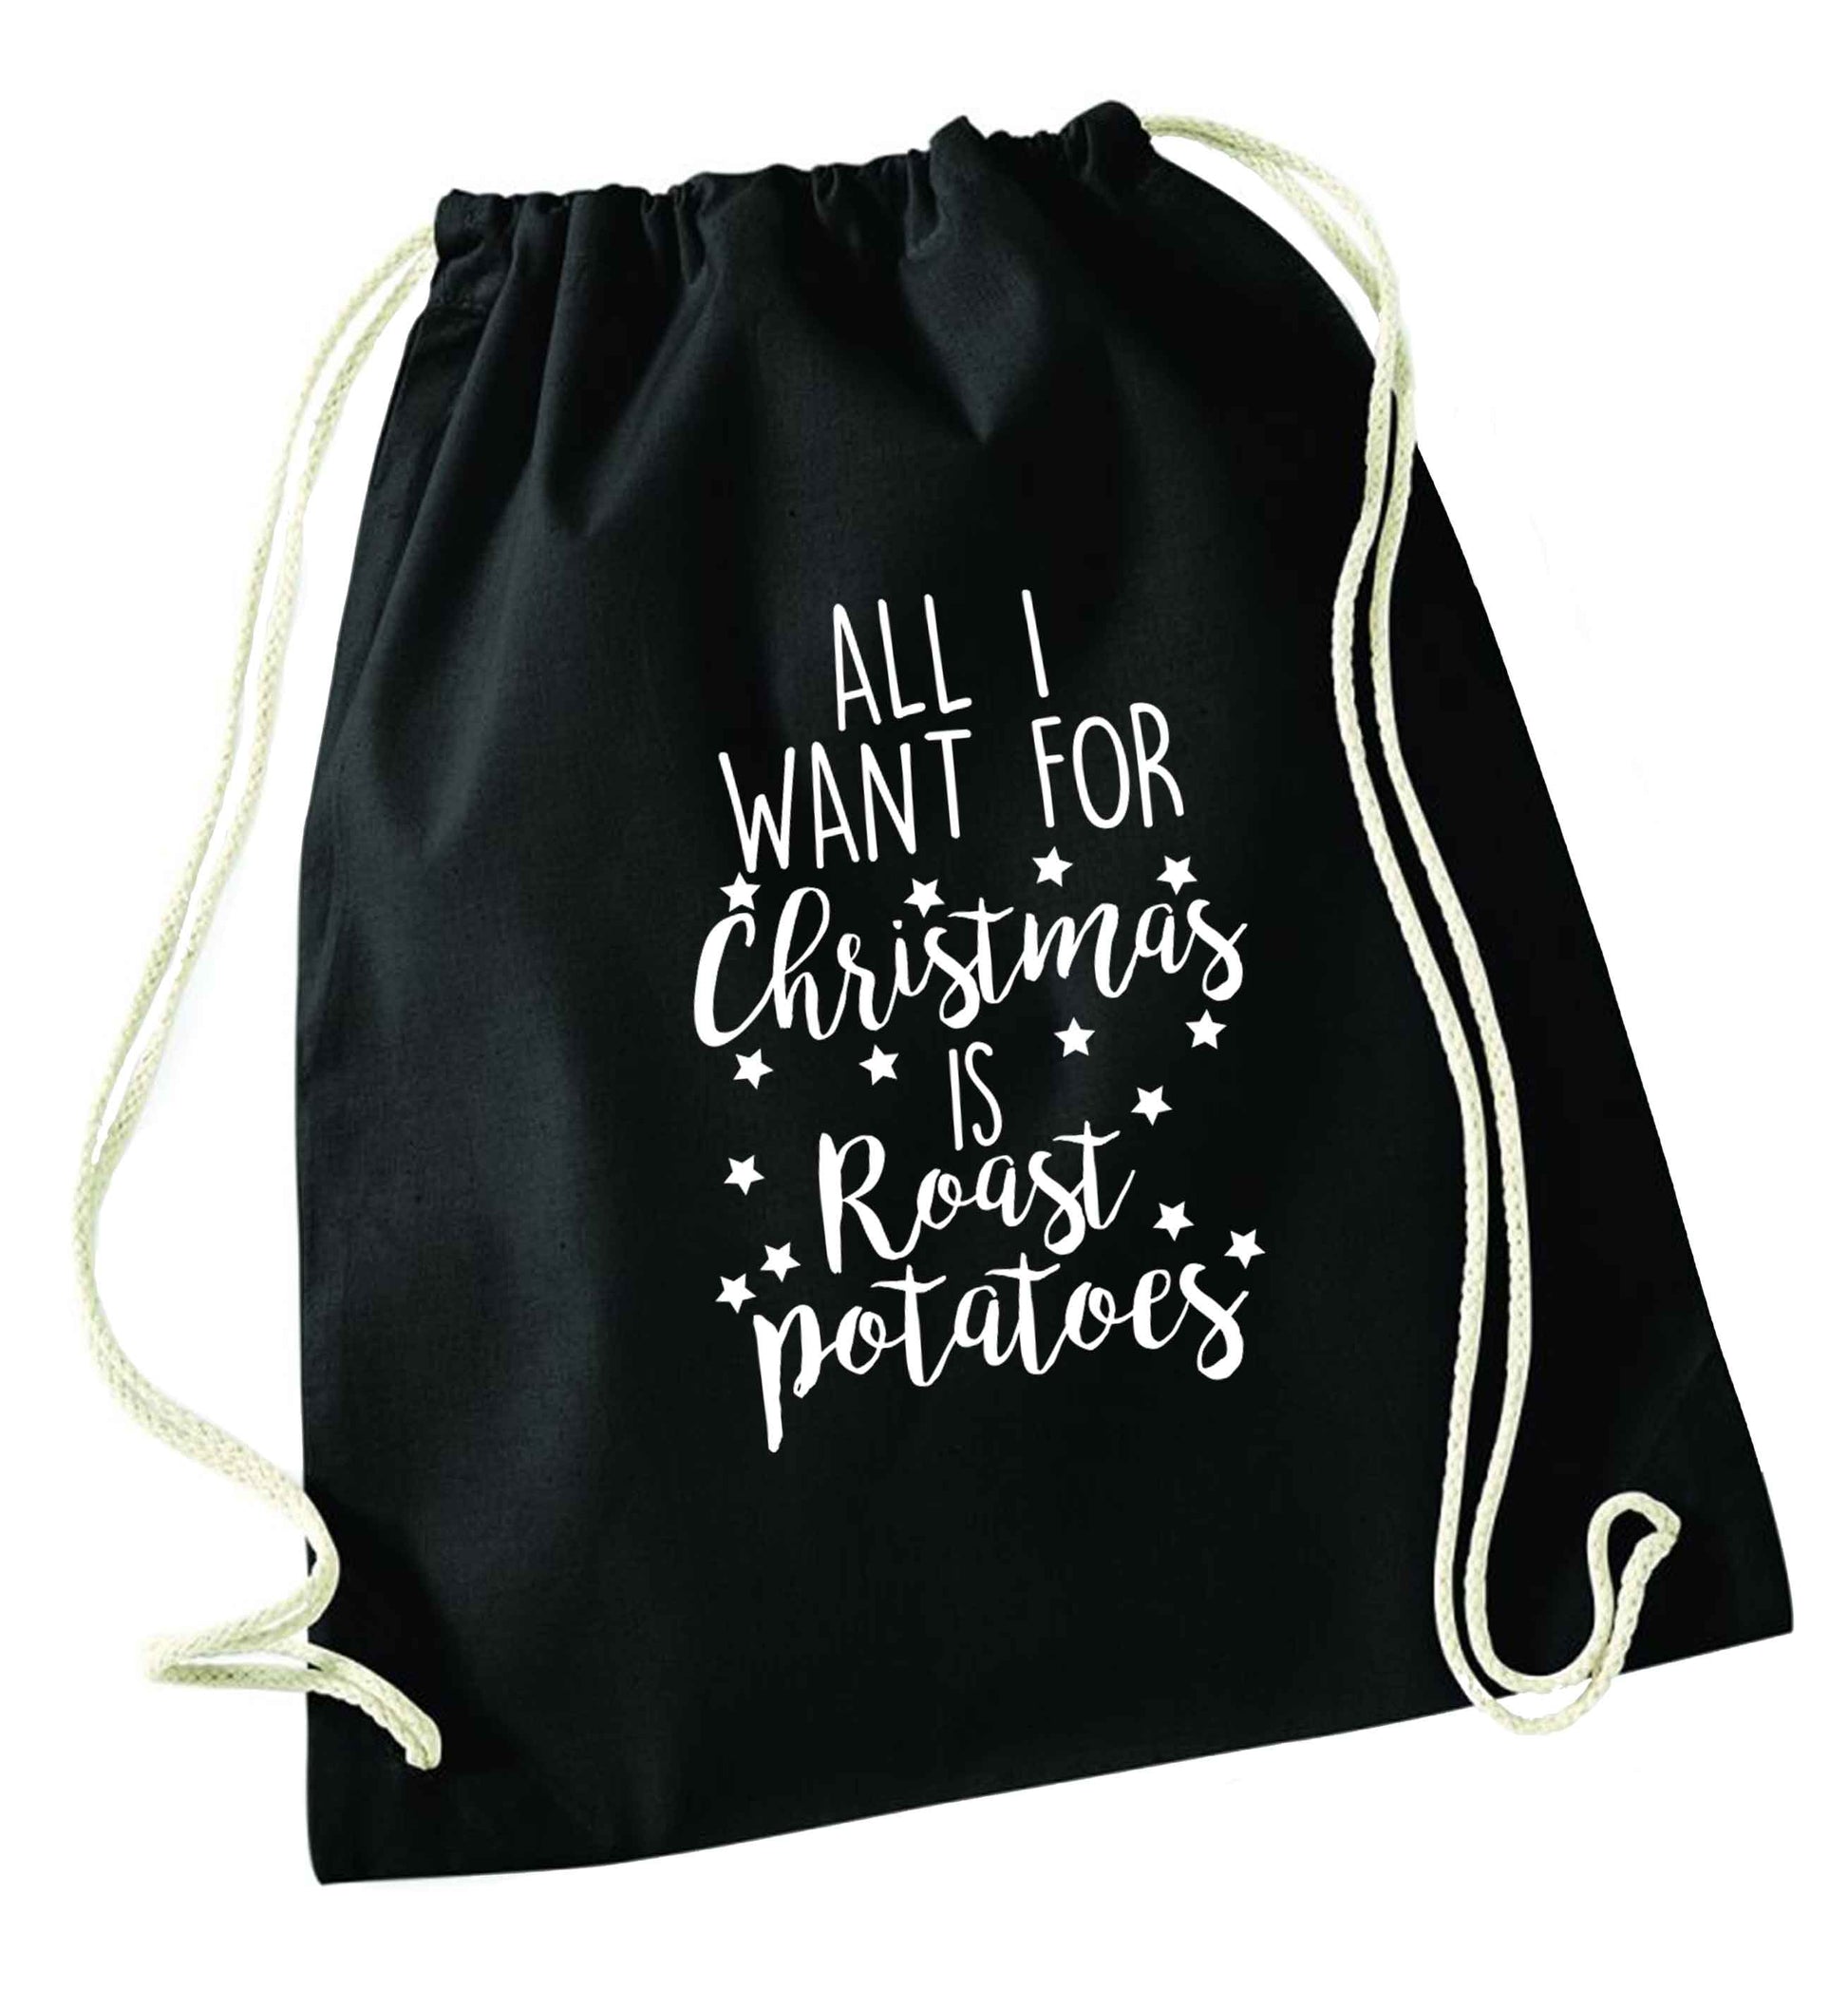 All I want for Christmas is roast potatoes black drawstring bag